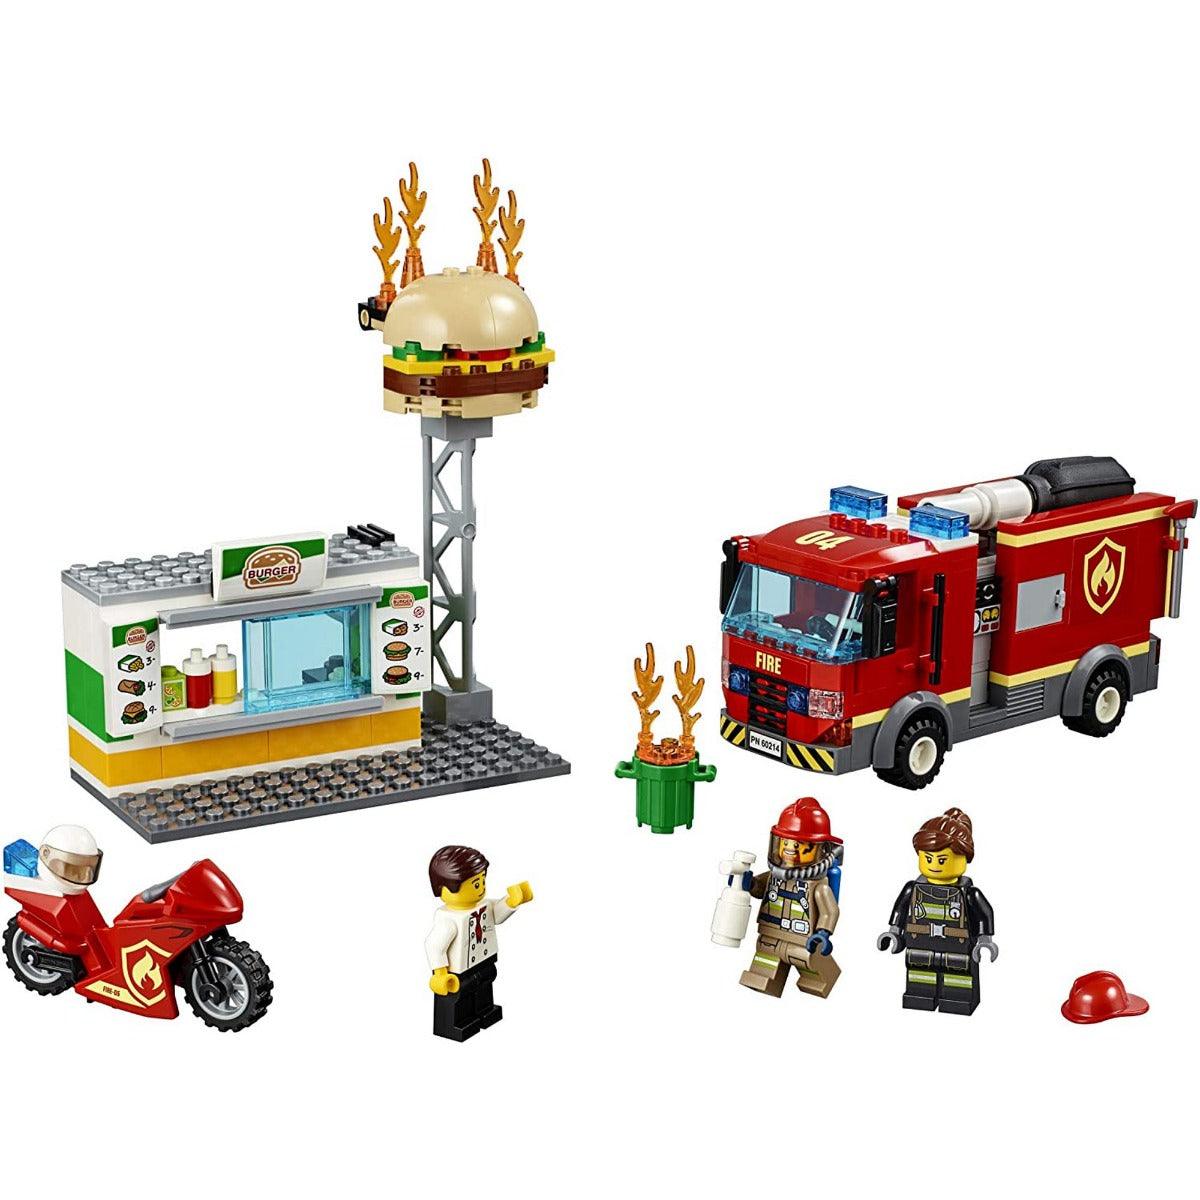 LEGO City Burger Bar Fire Rescue